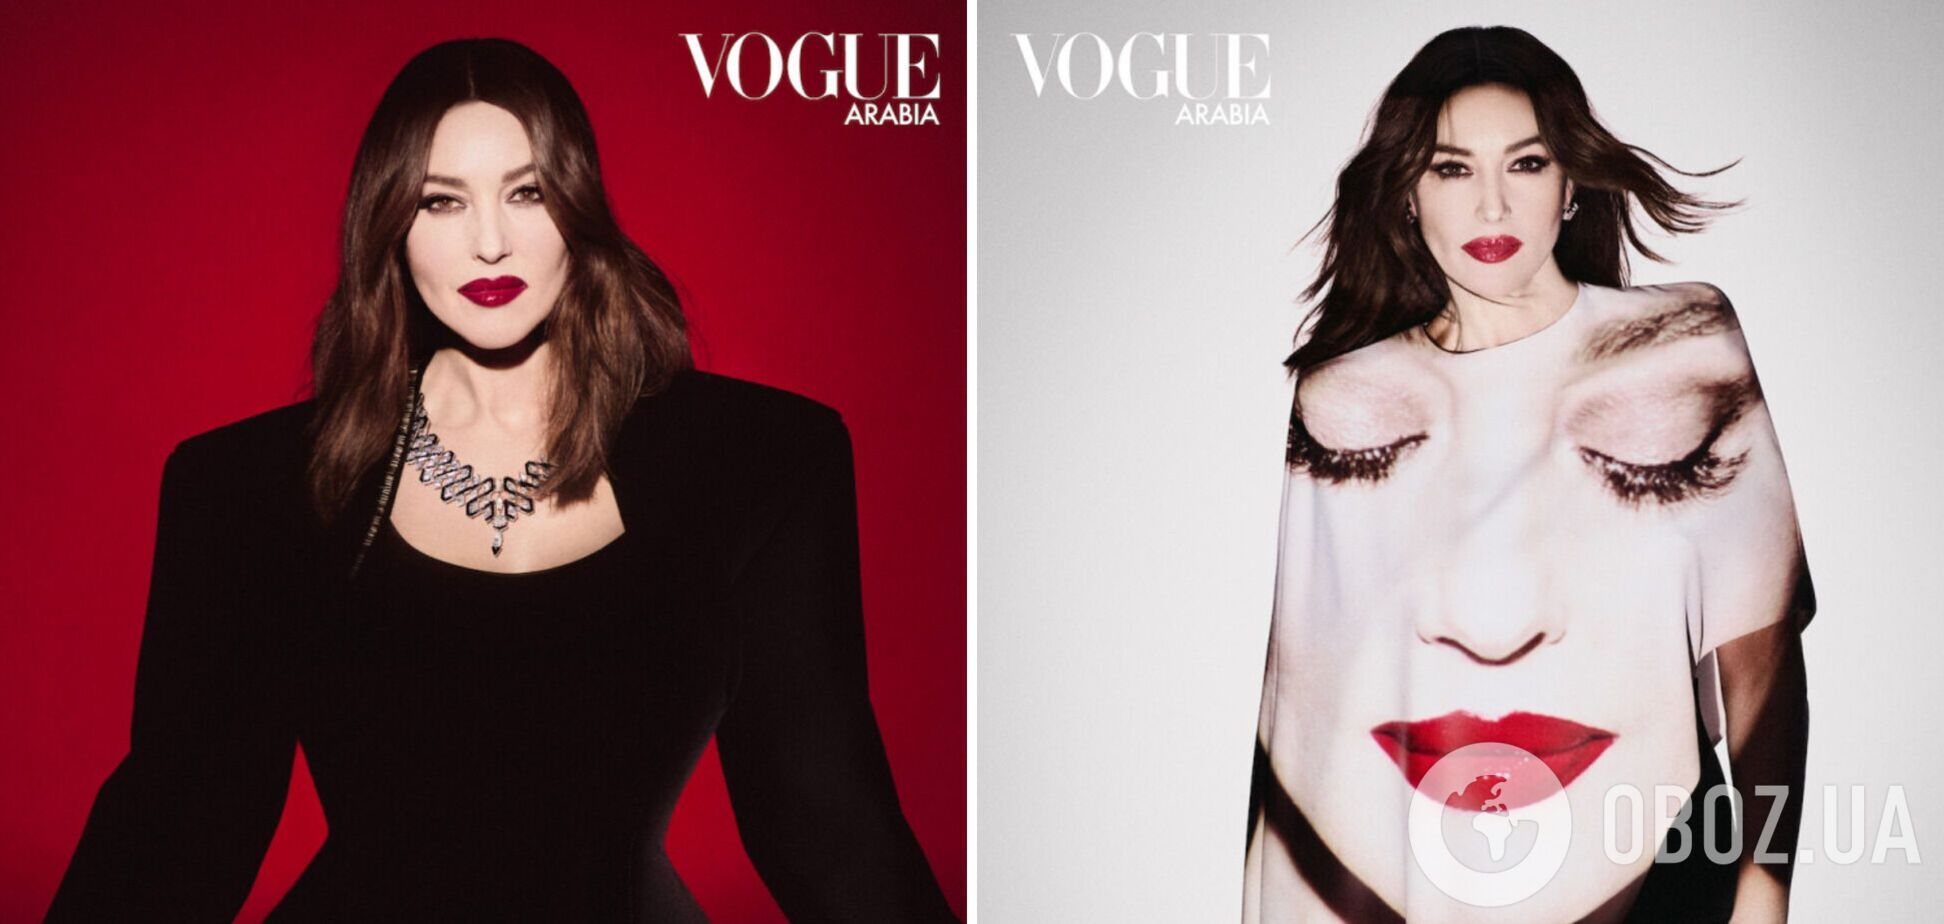 Совершенство от волос до ног: 59-летняя Моника Беллуччи попала на обложку арабского Vogue